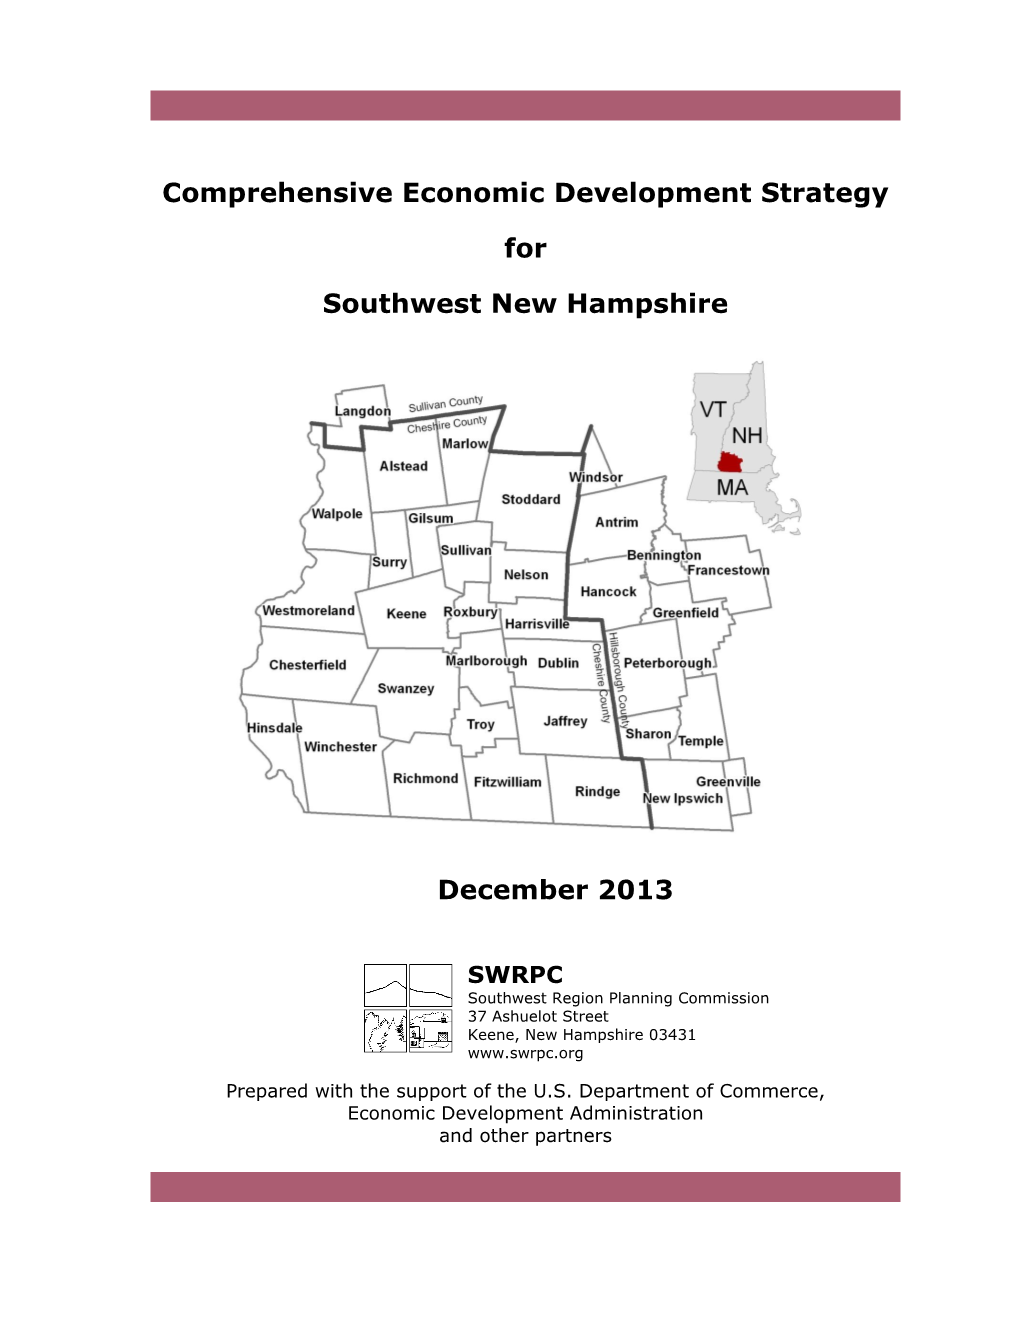 Comprehensive Economic Development Strategy for Southwest New Hampshire December 2013